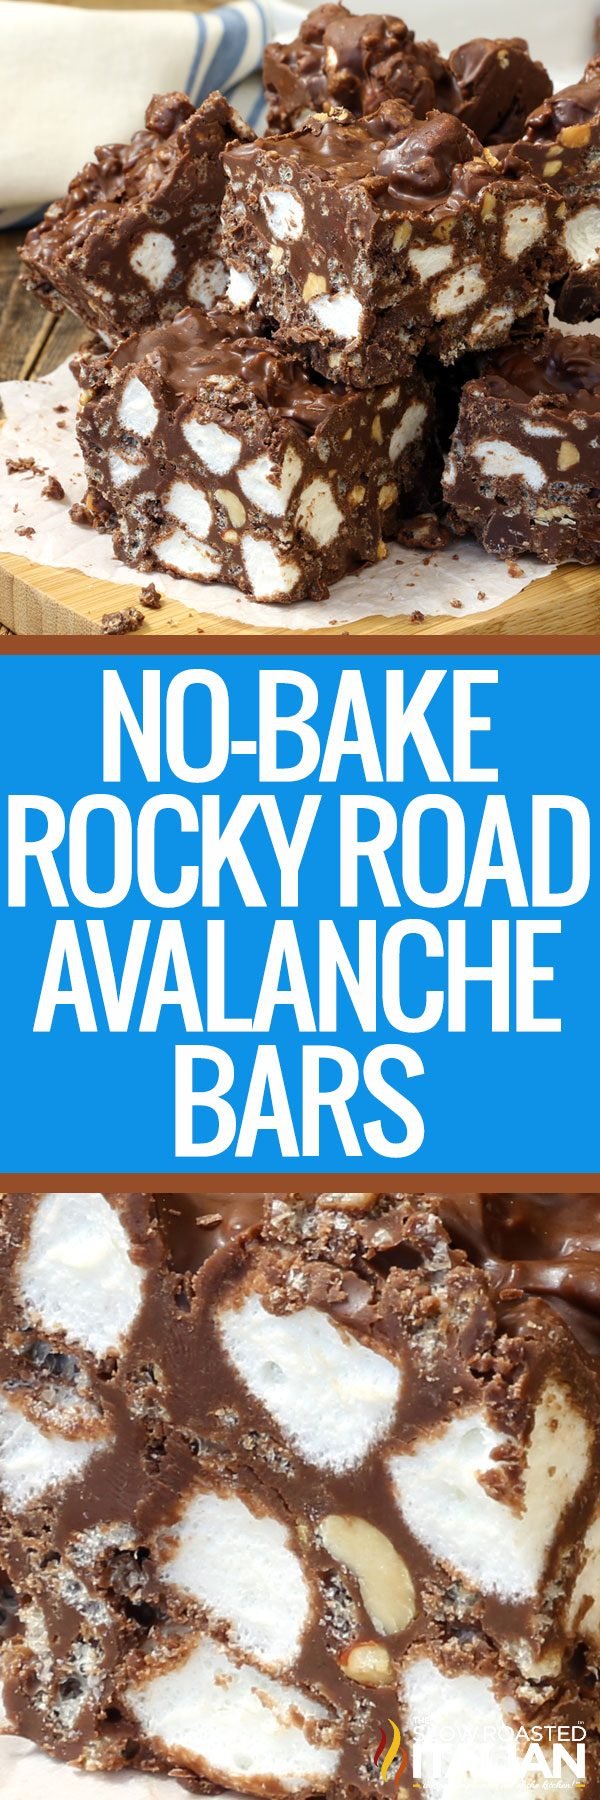 no bake rocky road avalanche bars -pin